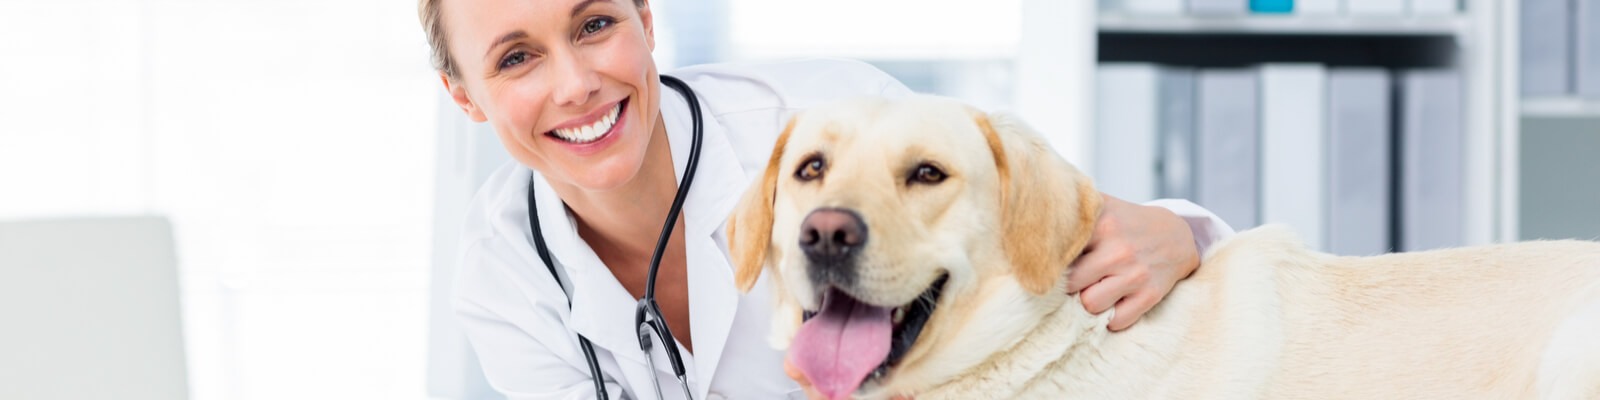 veterinary practice financing - feature image